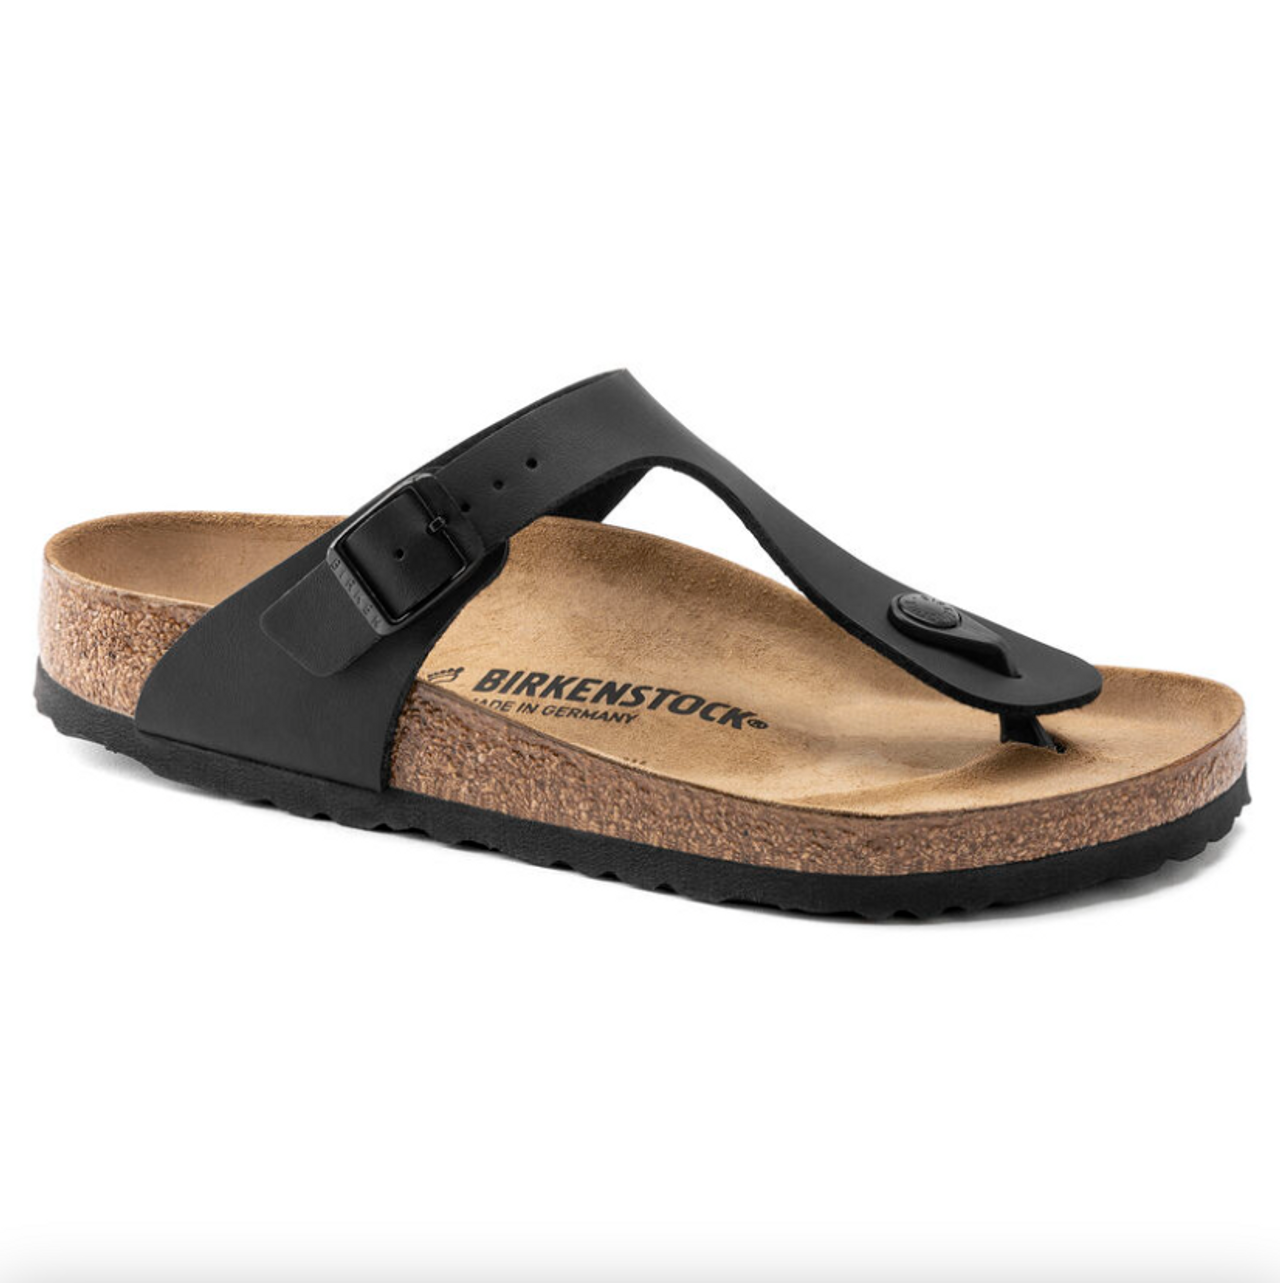 Shoes - Sandals - Monkee’s of Fredericksburg